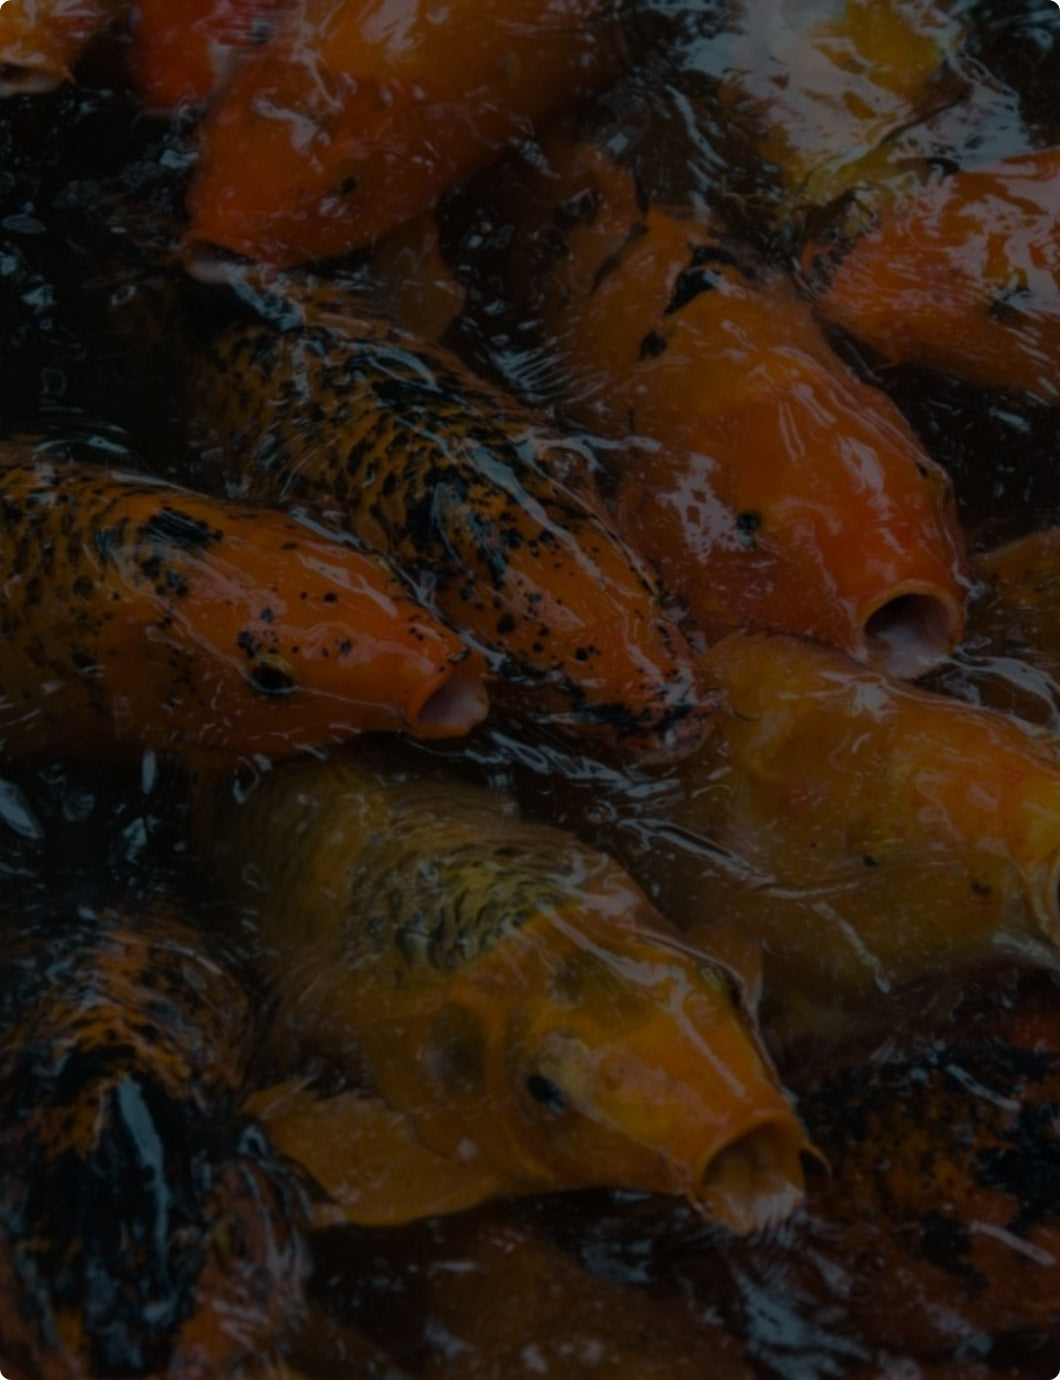 Orange fish in water